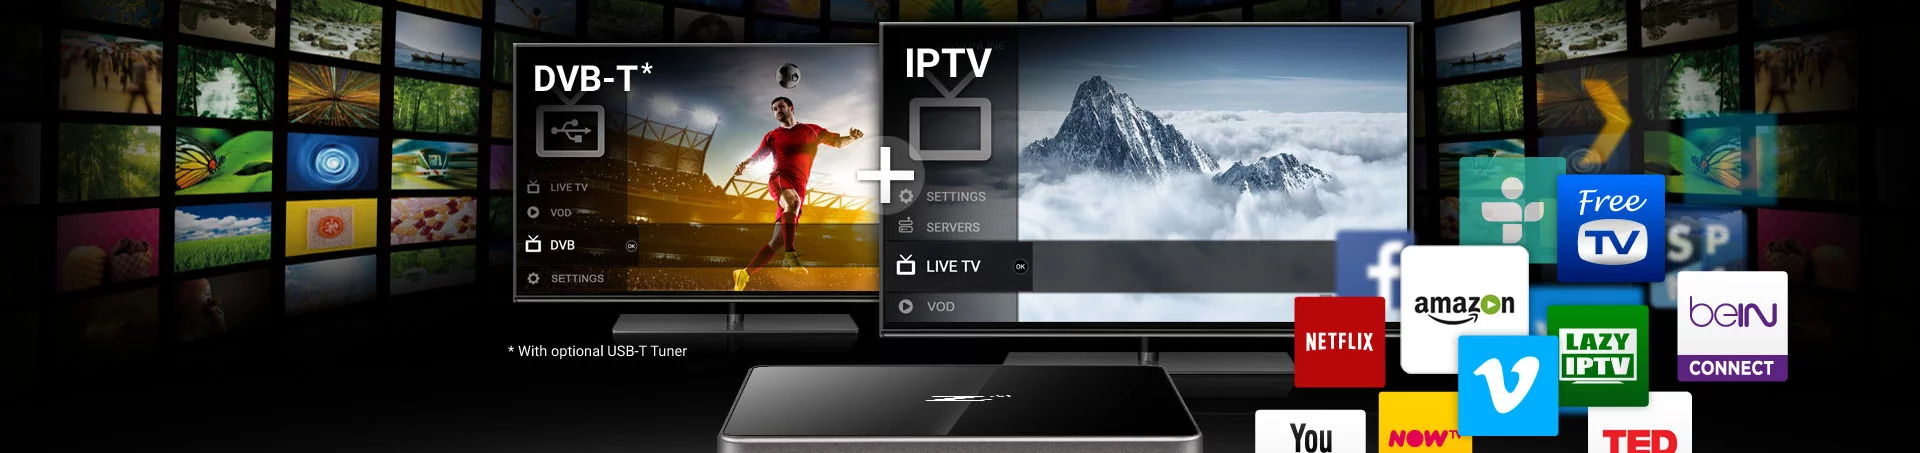 Formuler Zx IPTV Android 7.0 Media Receiver 4K UHD